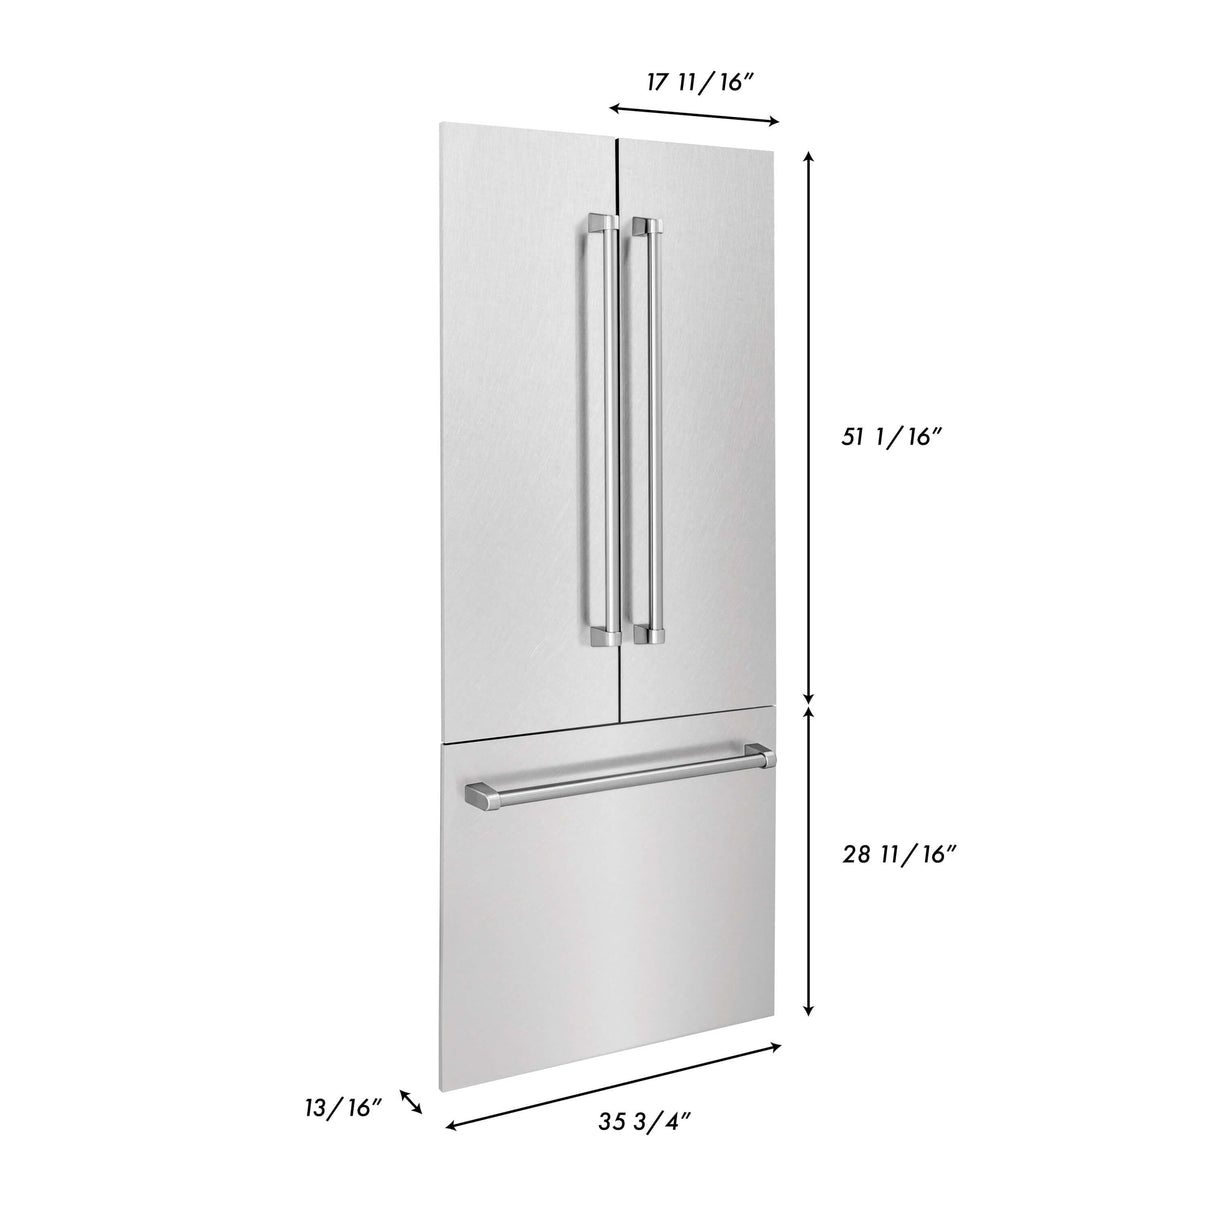 ZLINE 36 in. Refrigerator Panels and Handles in Fingerprint-Resistant Stainless Steel for Built-in Refrigerators (RPBIV-SN-36)